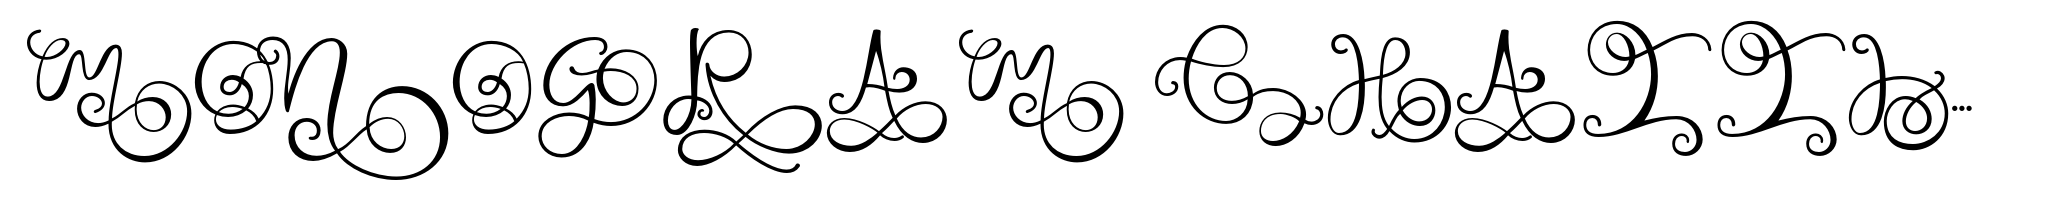 Monogram Challigraphy Regular 01 image